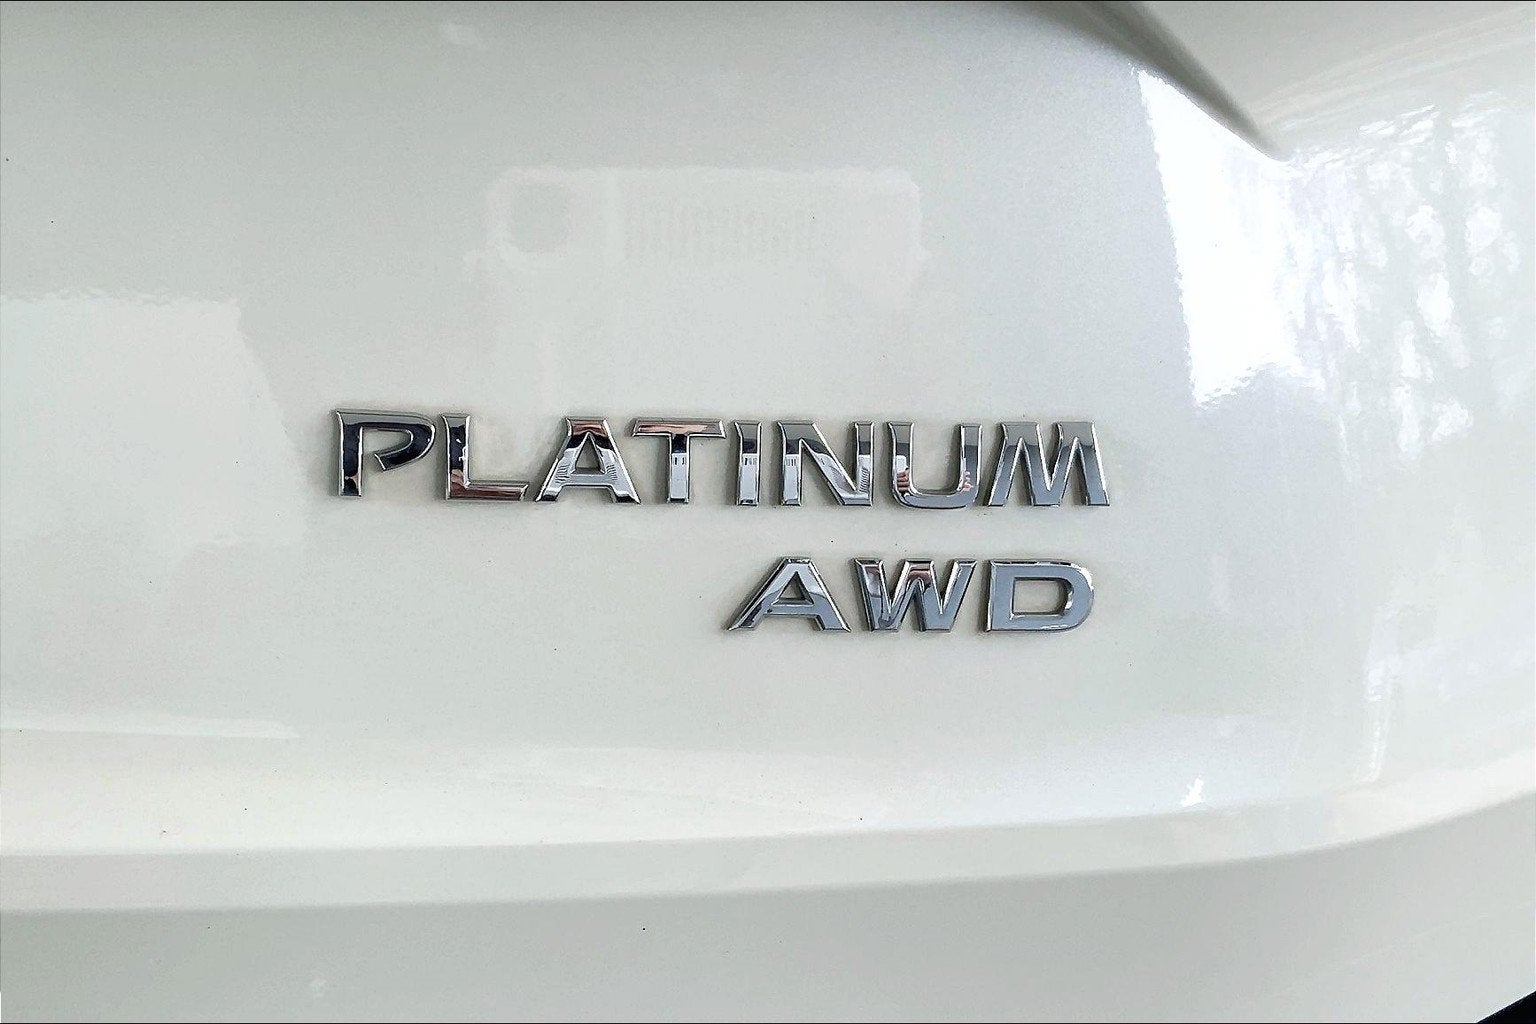 2021 Nissan Rogue Platinum